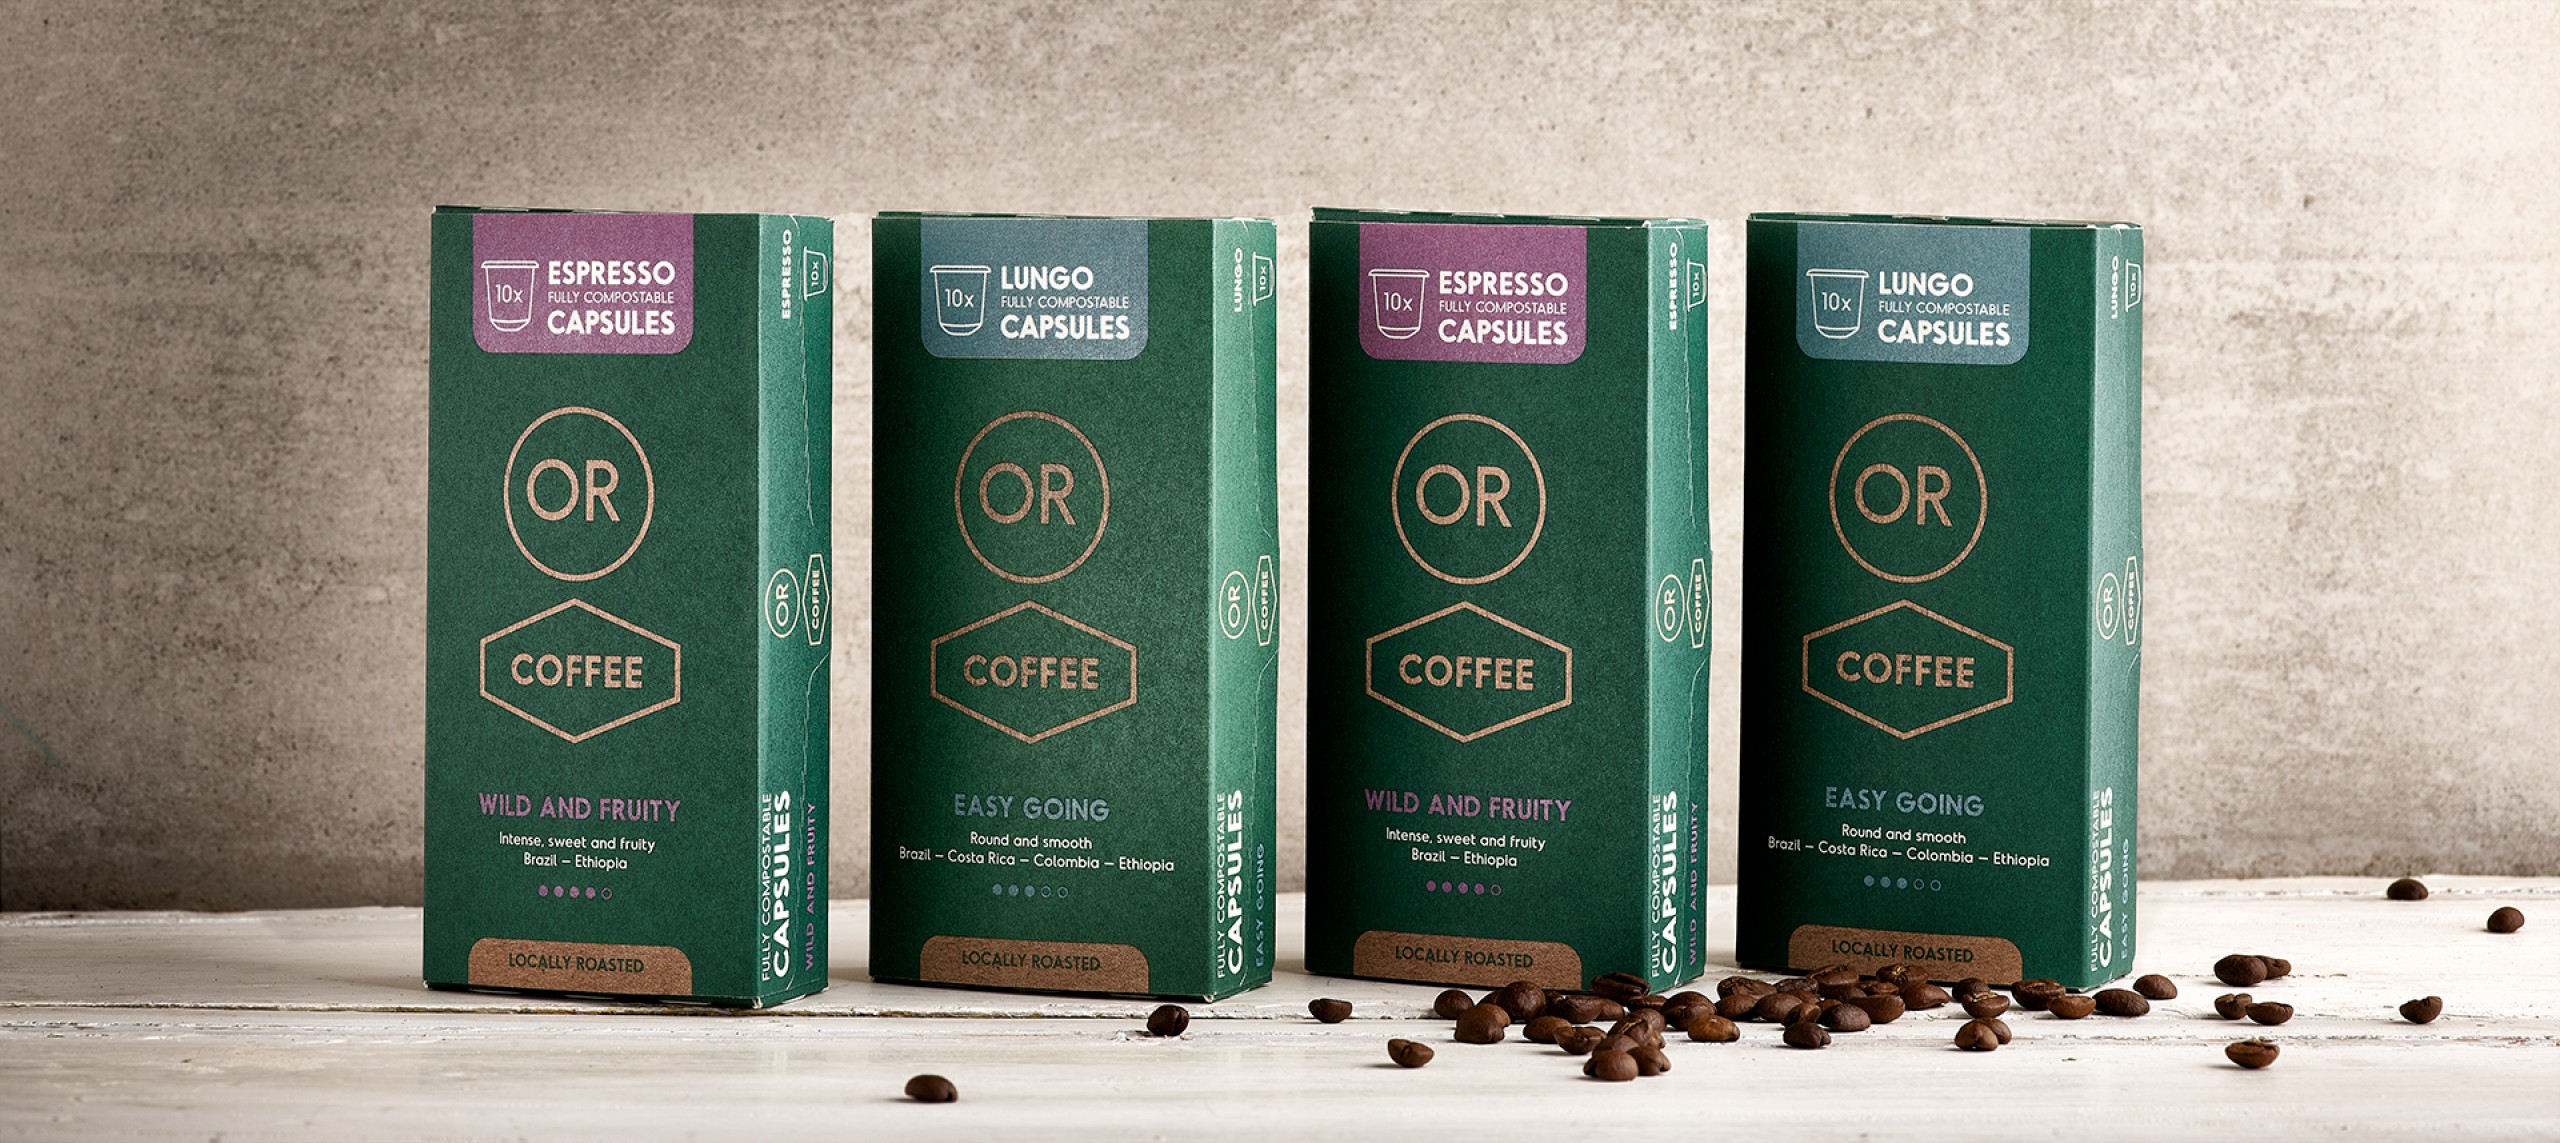 Quatre Mains package design - Package design coffee, or, quatre mains